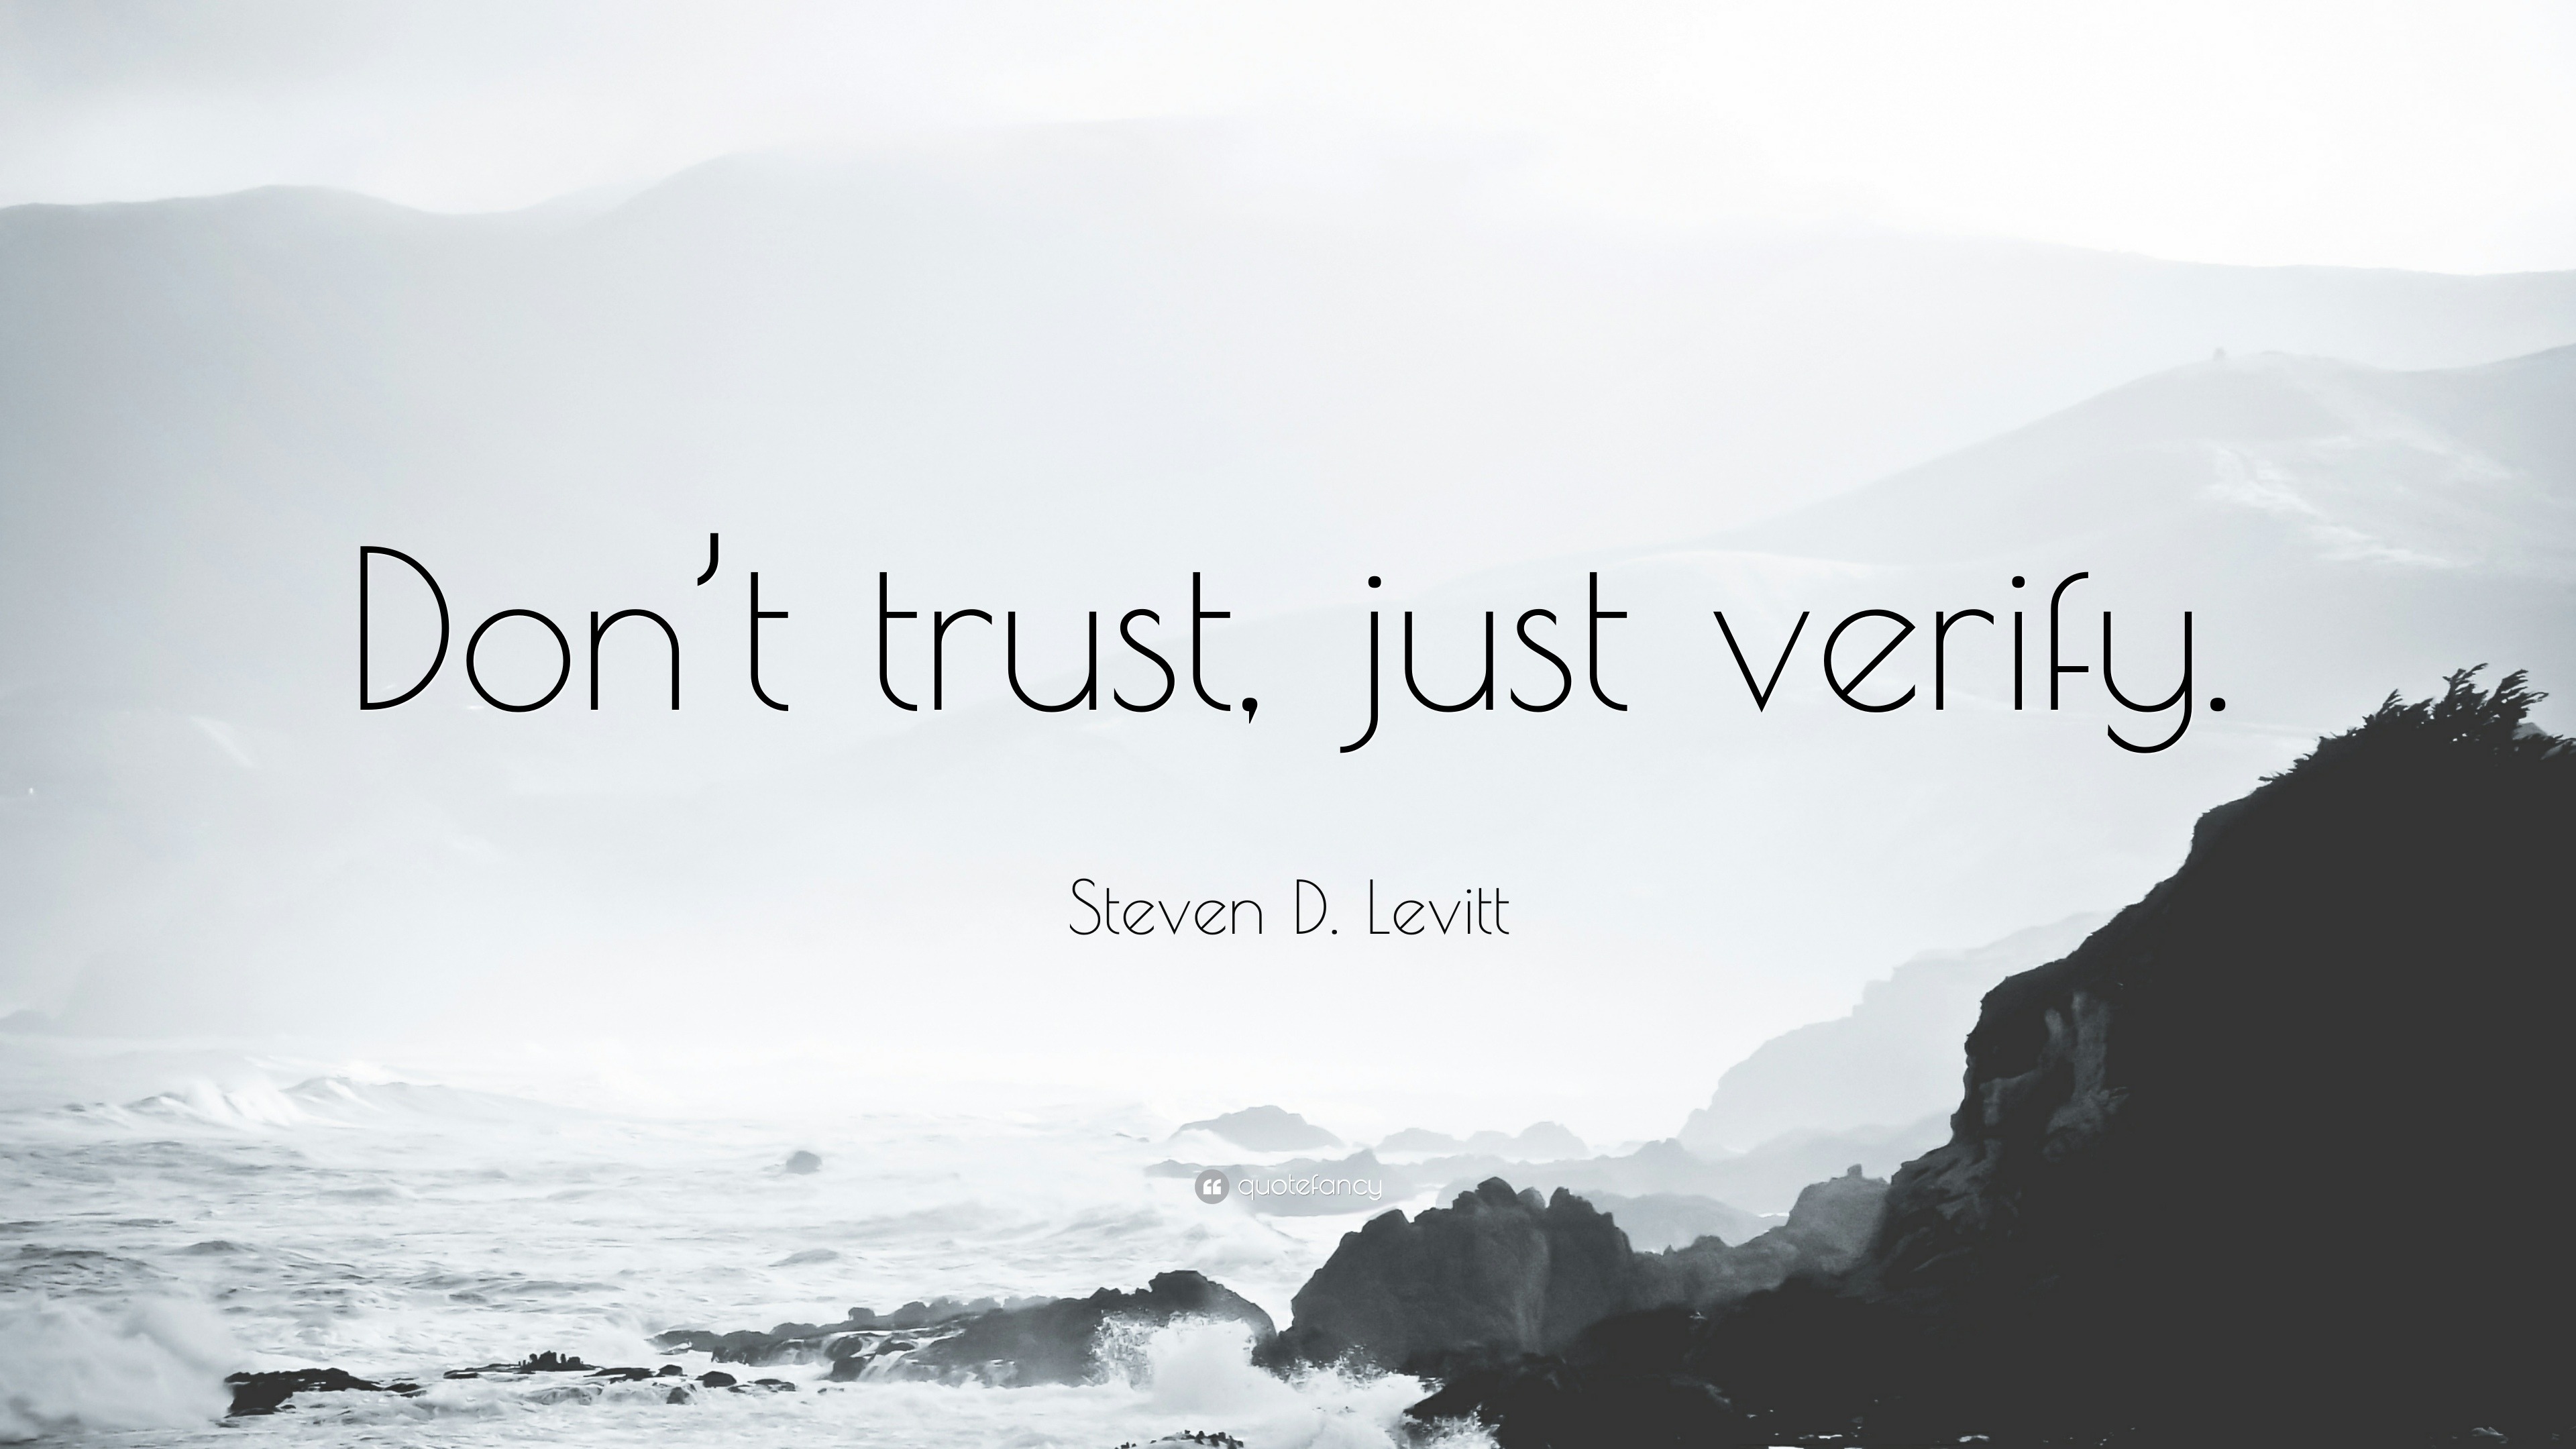 “Don’t trust, just verify.”